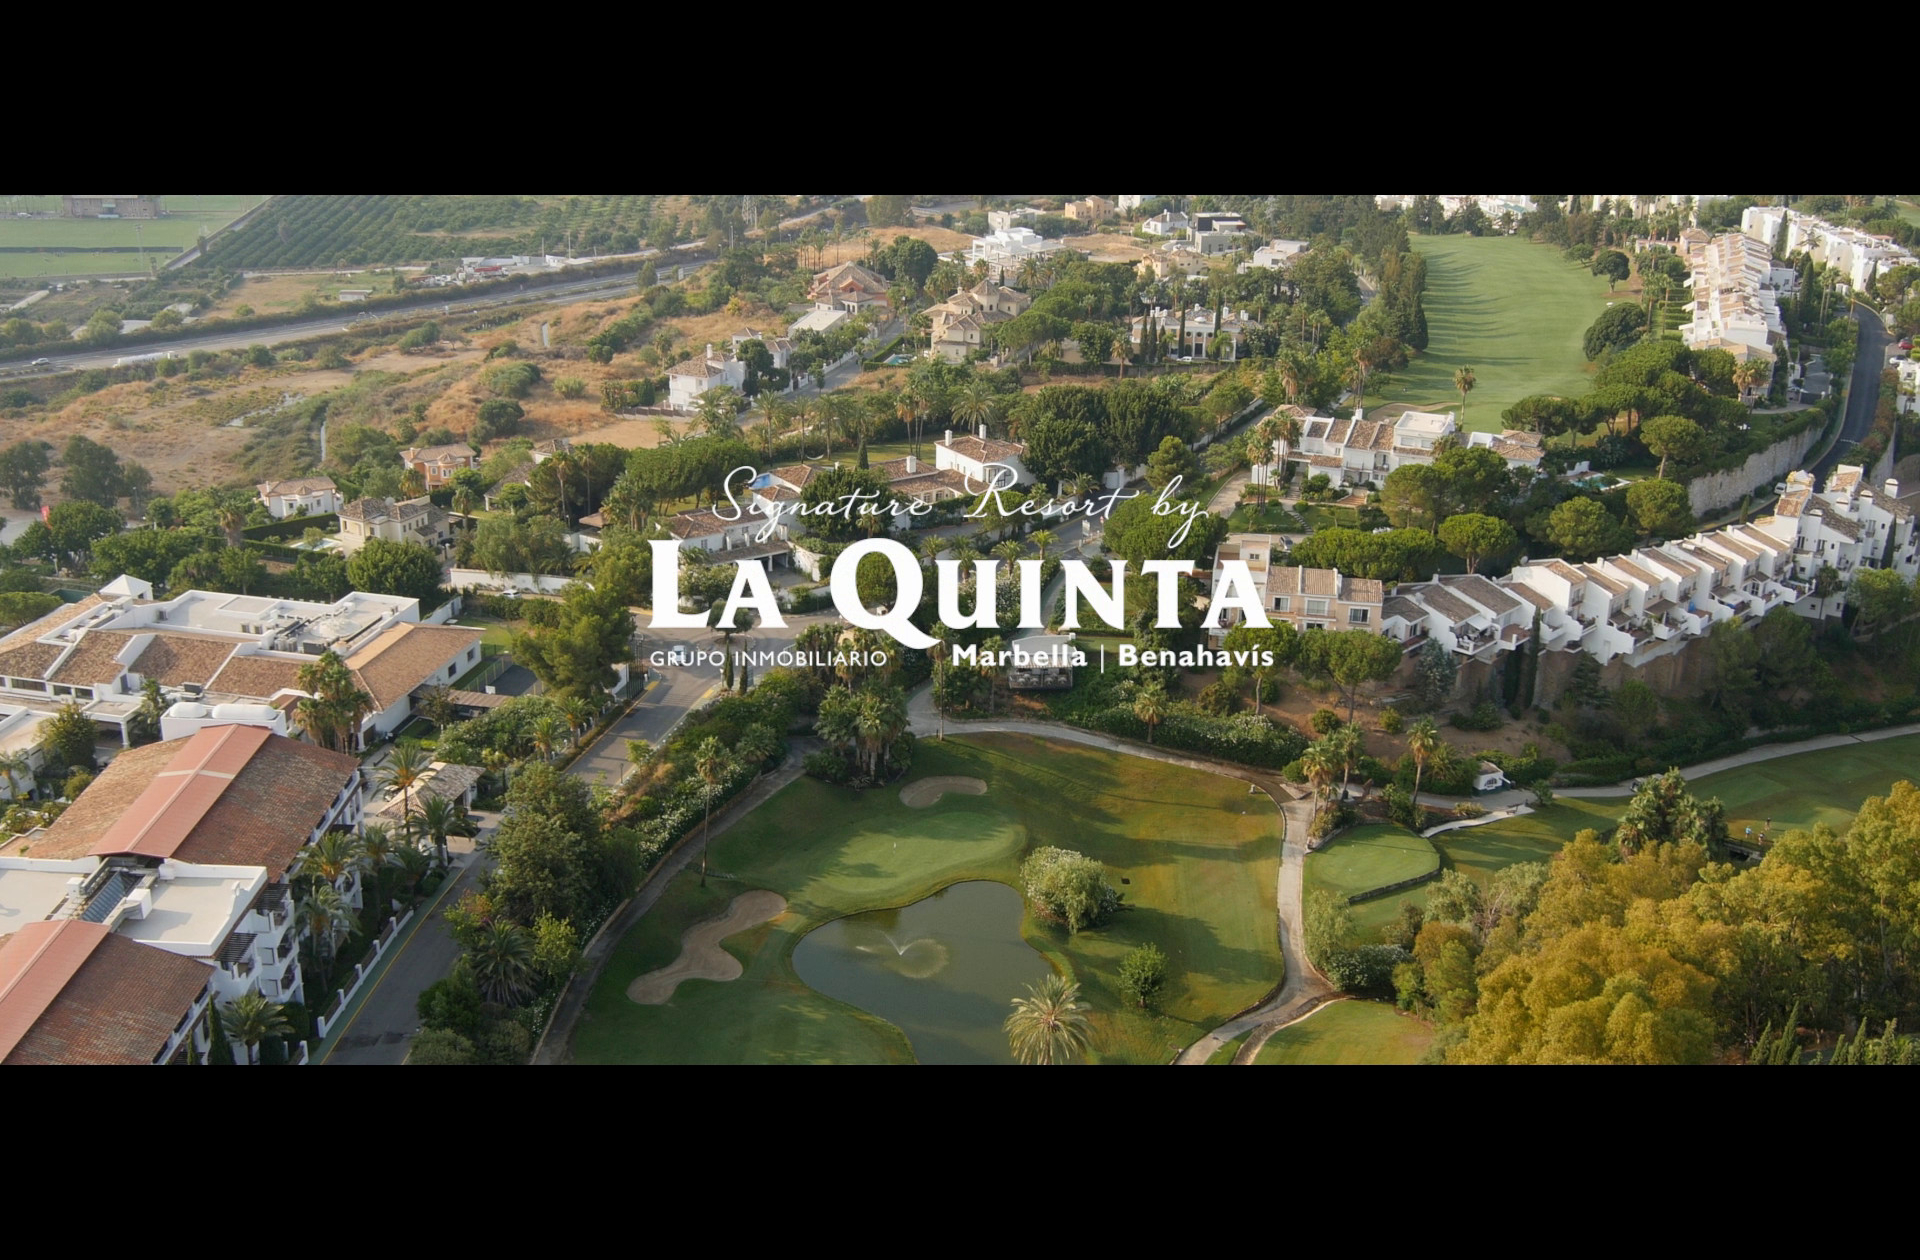 Preview image for the video "Real de La Quinta - LA QUINTA - English (Update: June 2019)".